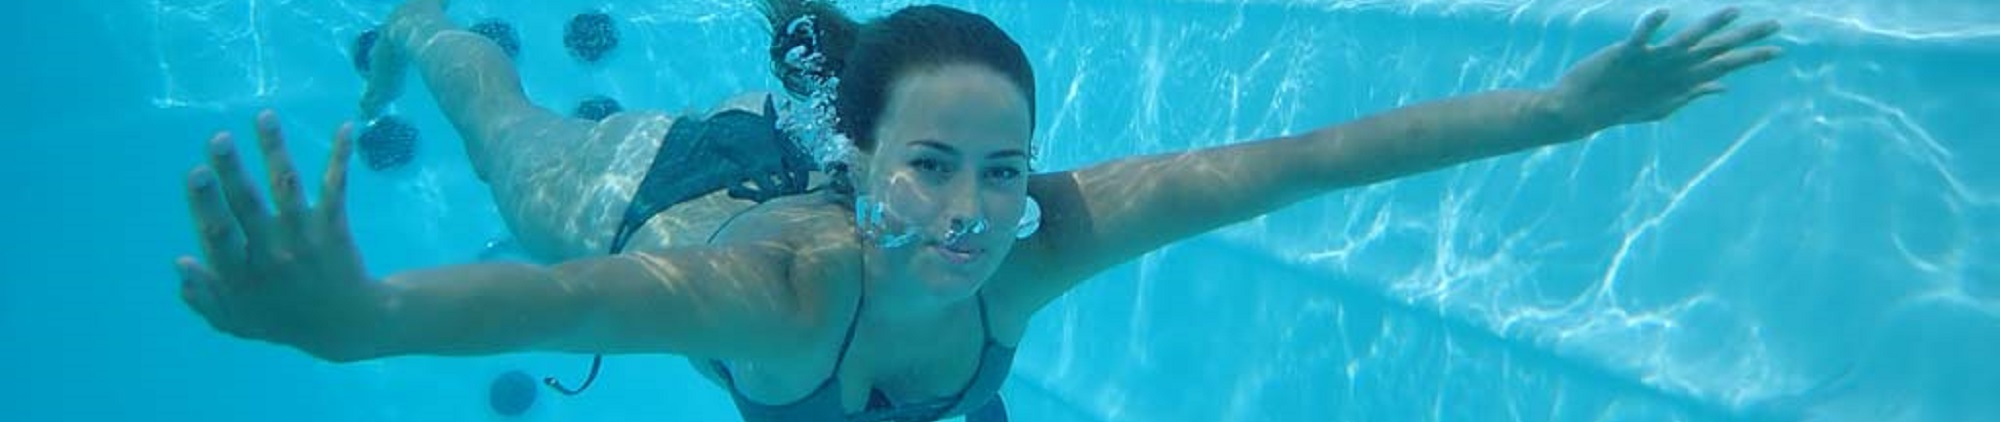 Whirlcare Swim-Spa Teaser